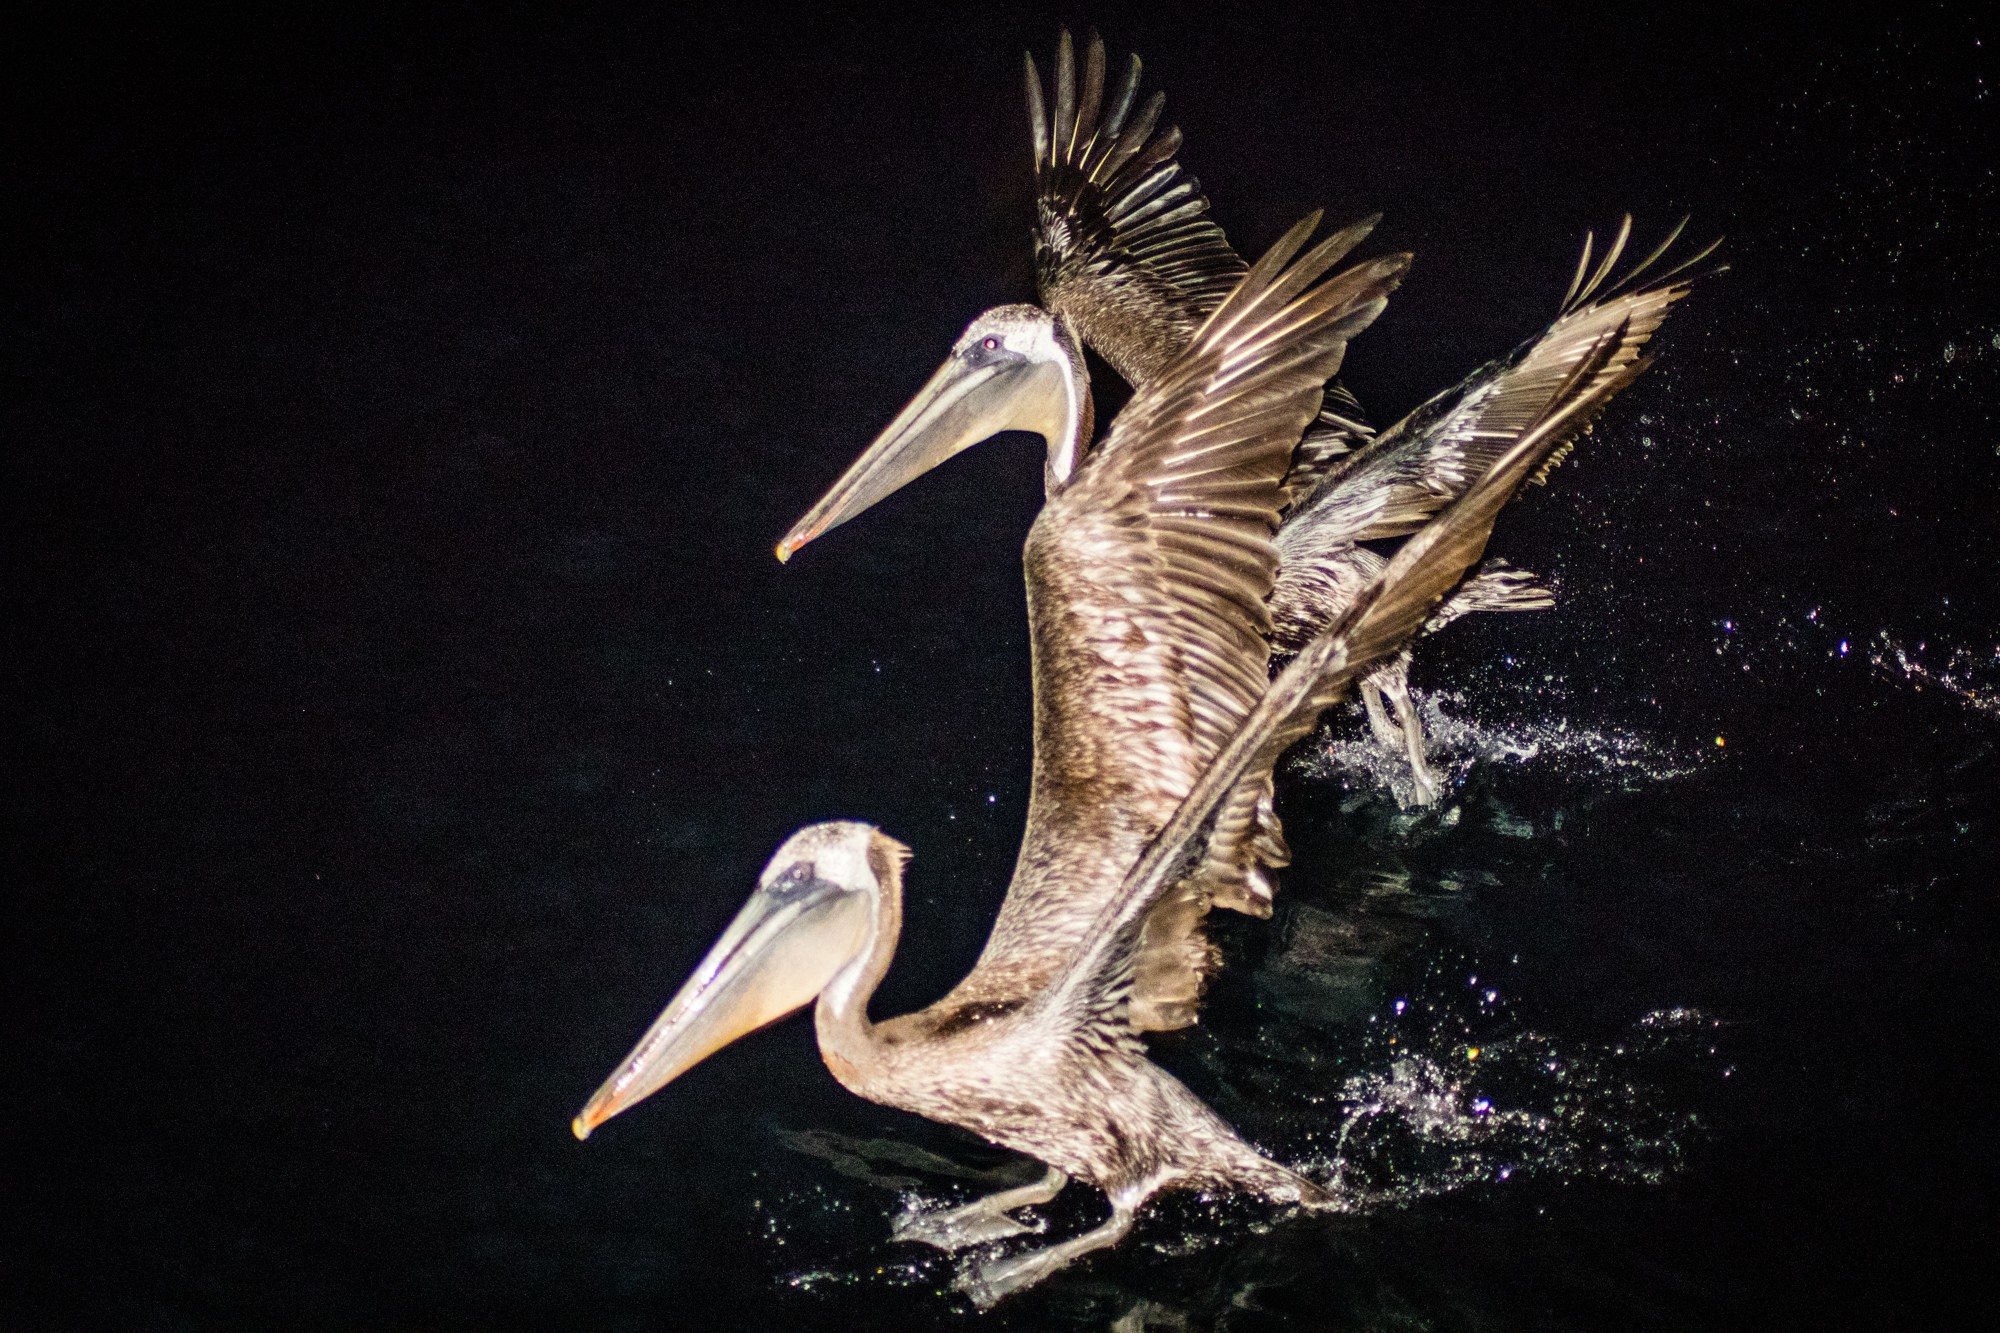 Pelicans night fishing